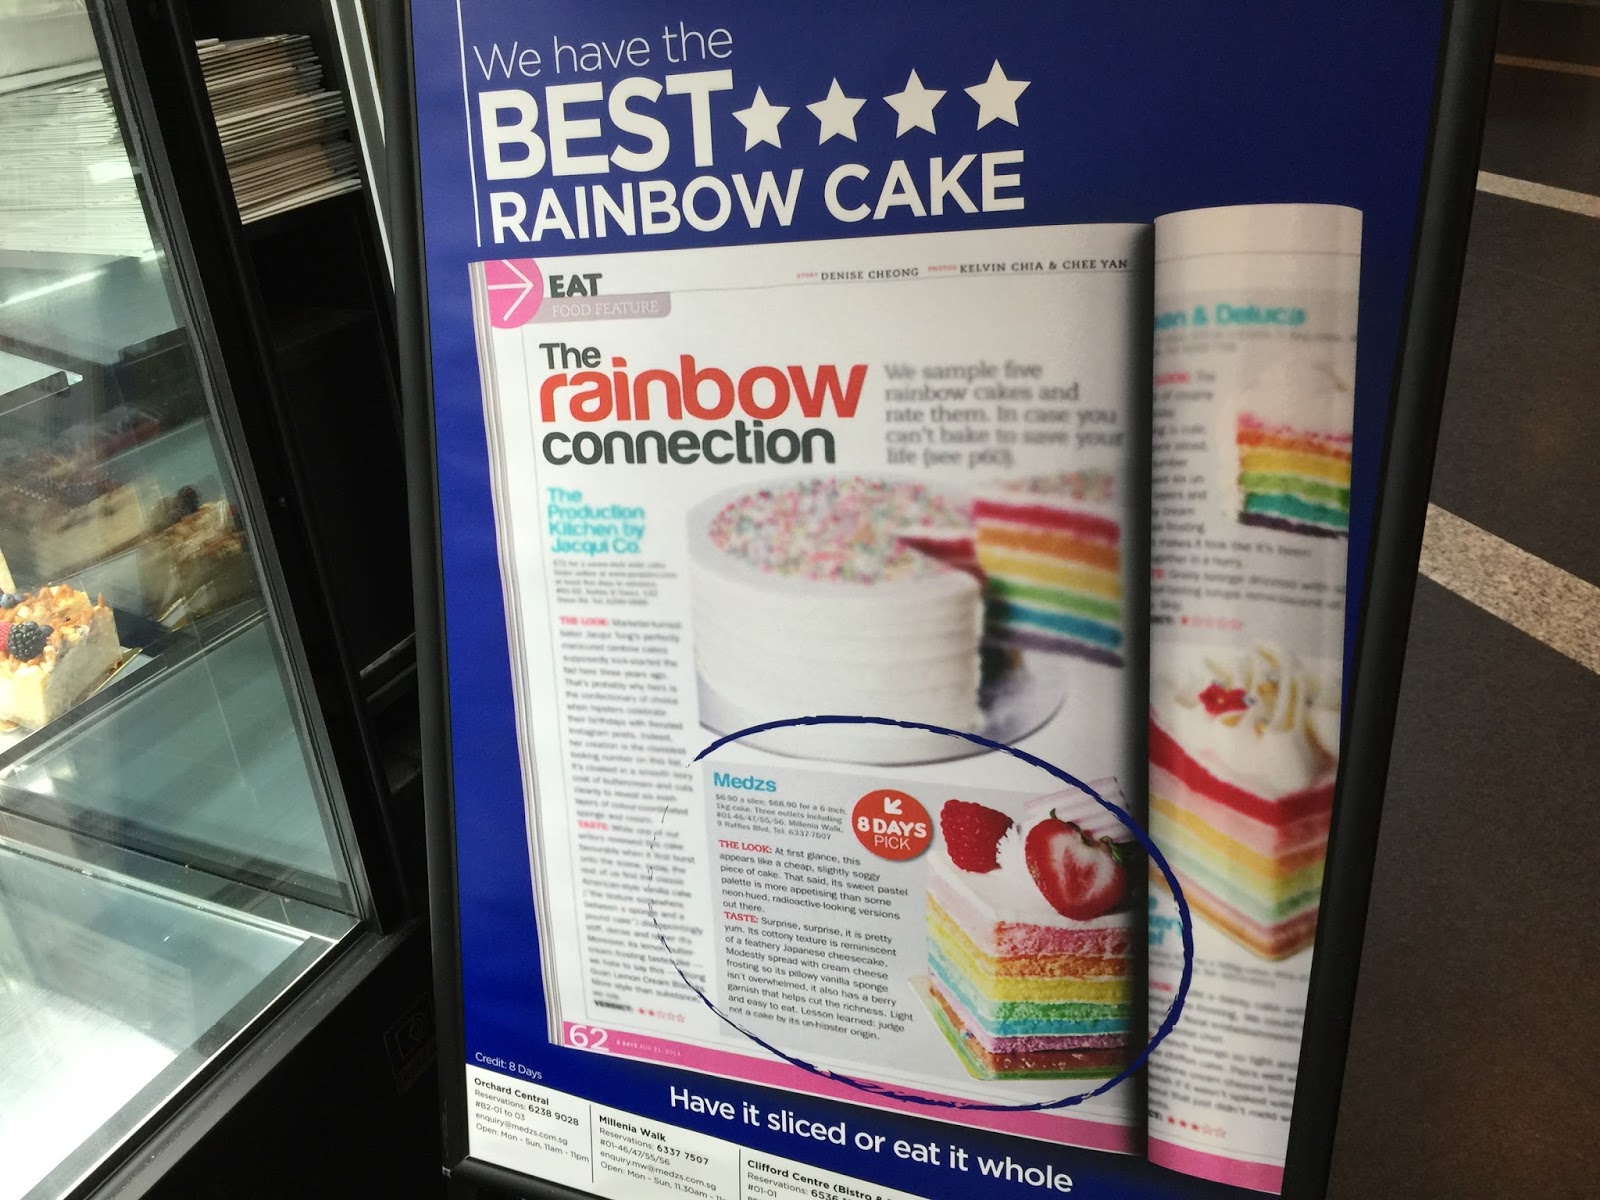 8 Days - MEDZS Bistro and Bar Rainbow Cake